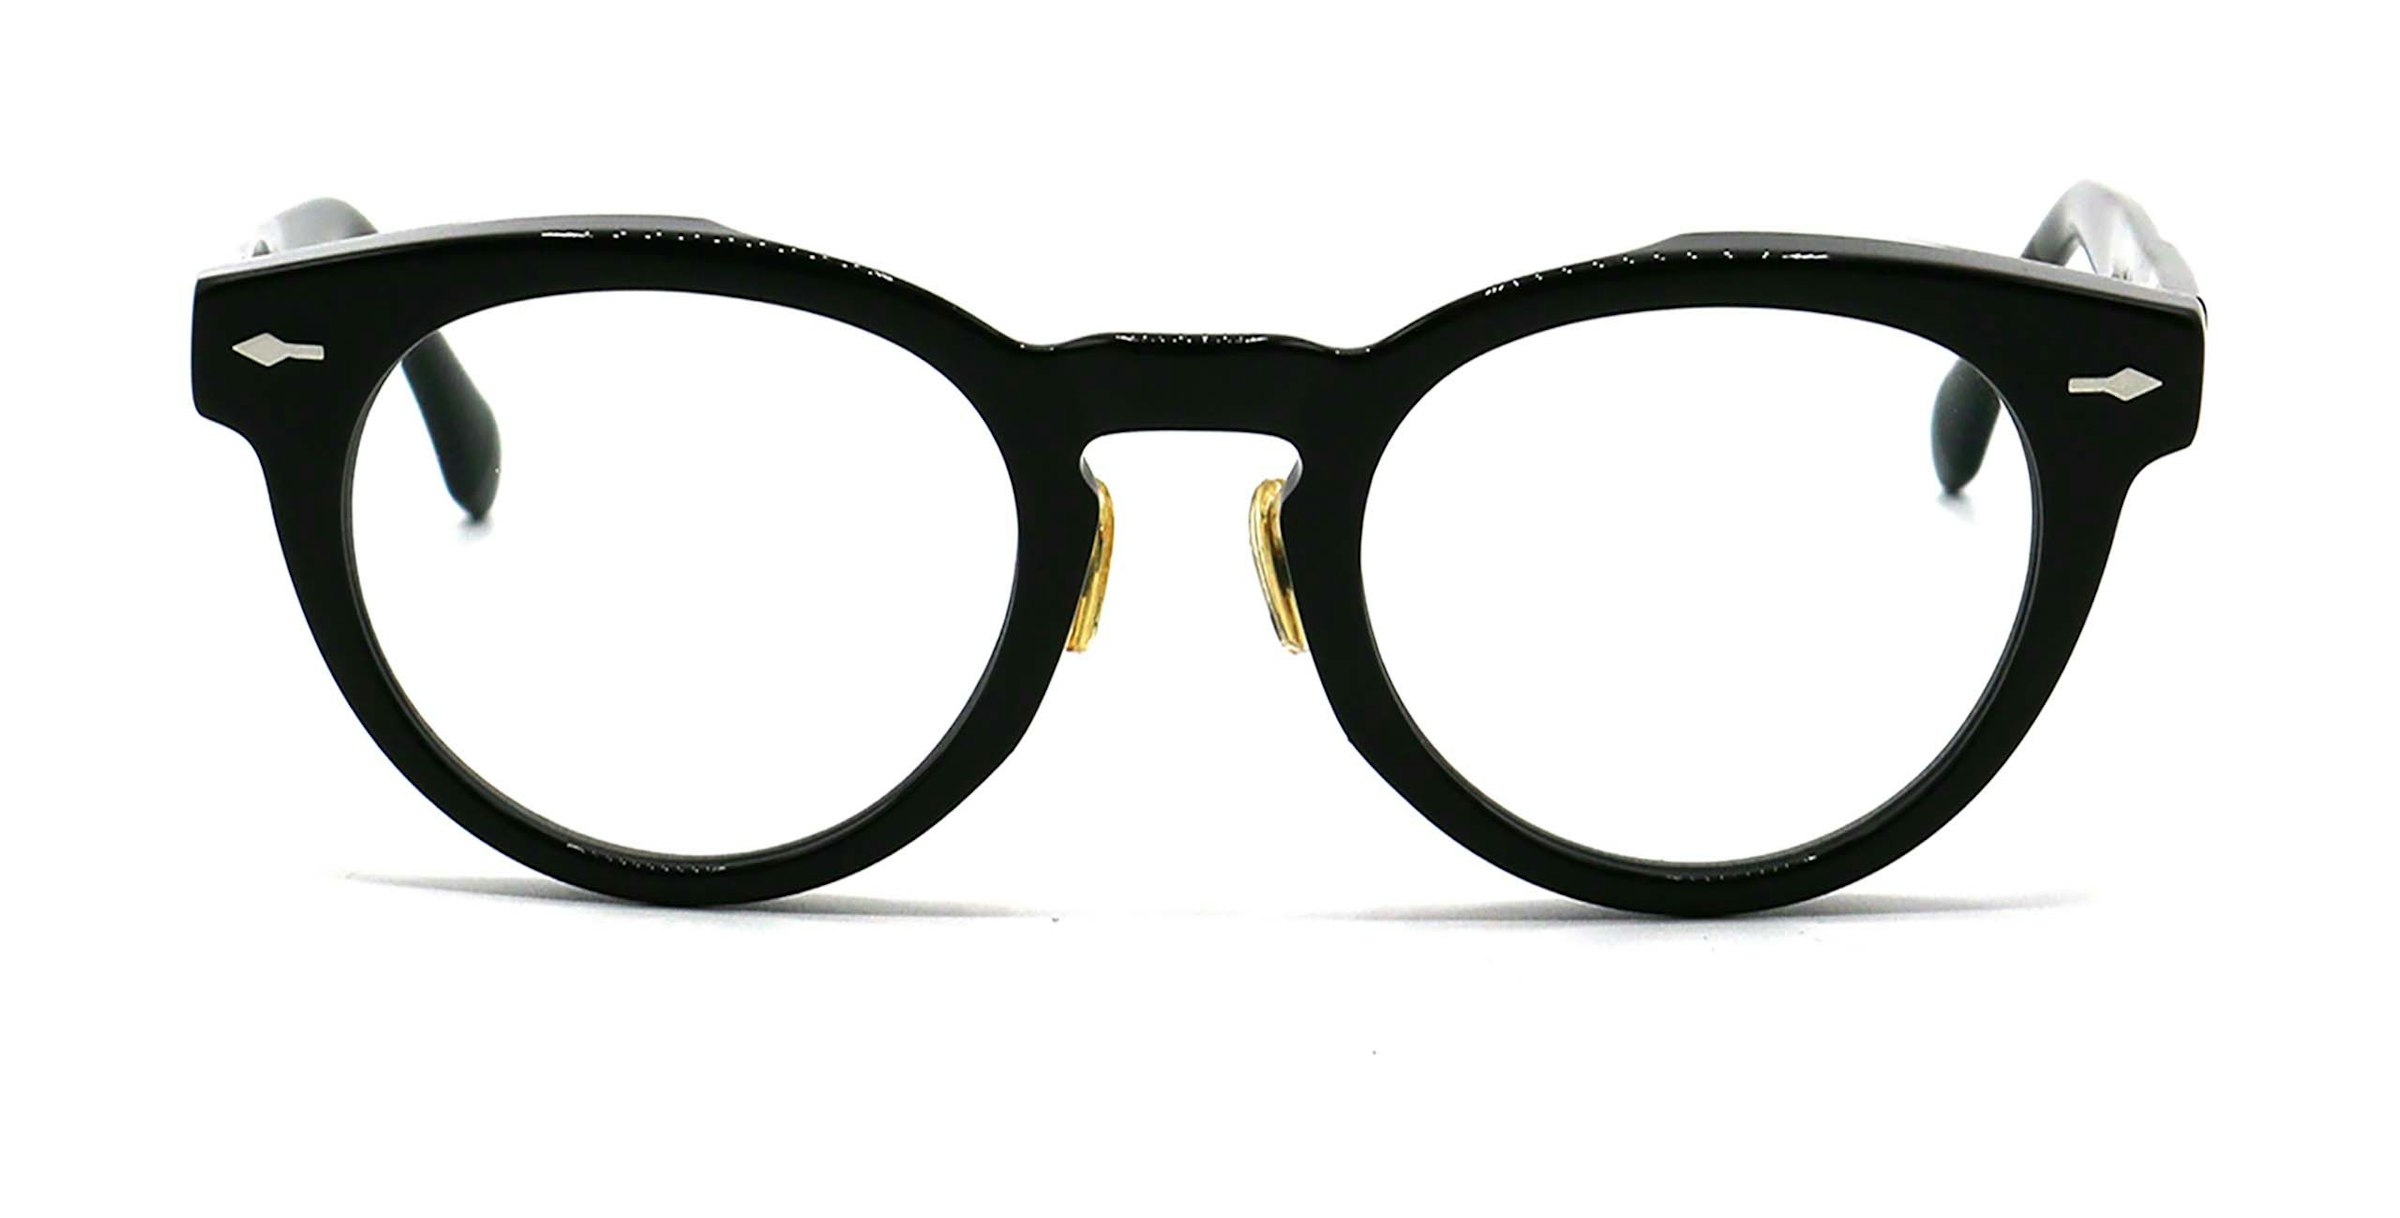 THALASSA-Black/Clear CPL（UV Protection Sunglasses）　15,400円（税込） 極太セルフレームが人気のモデル THALASSA